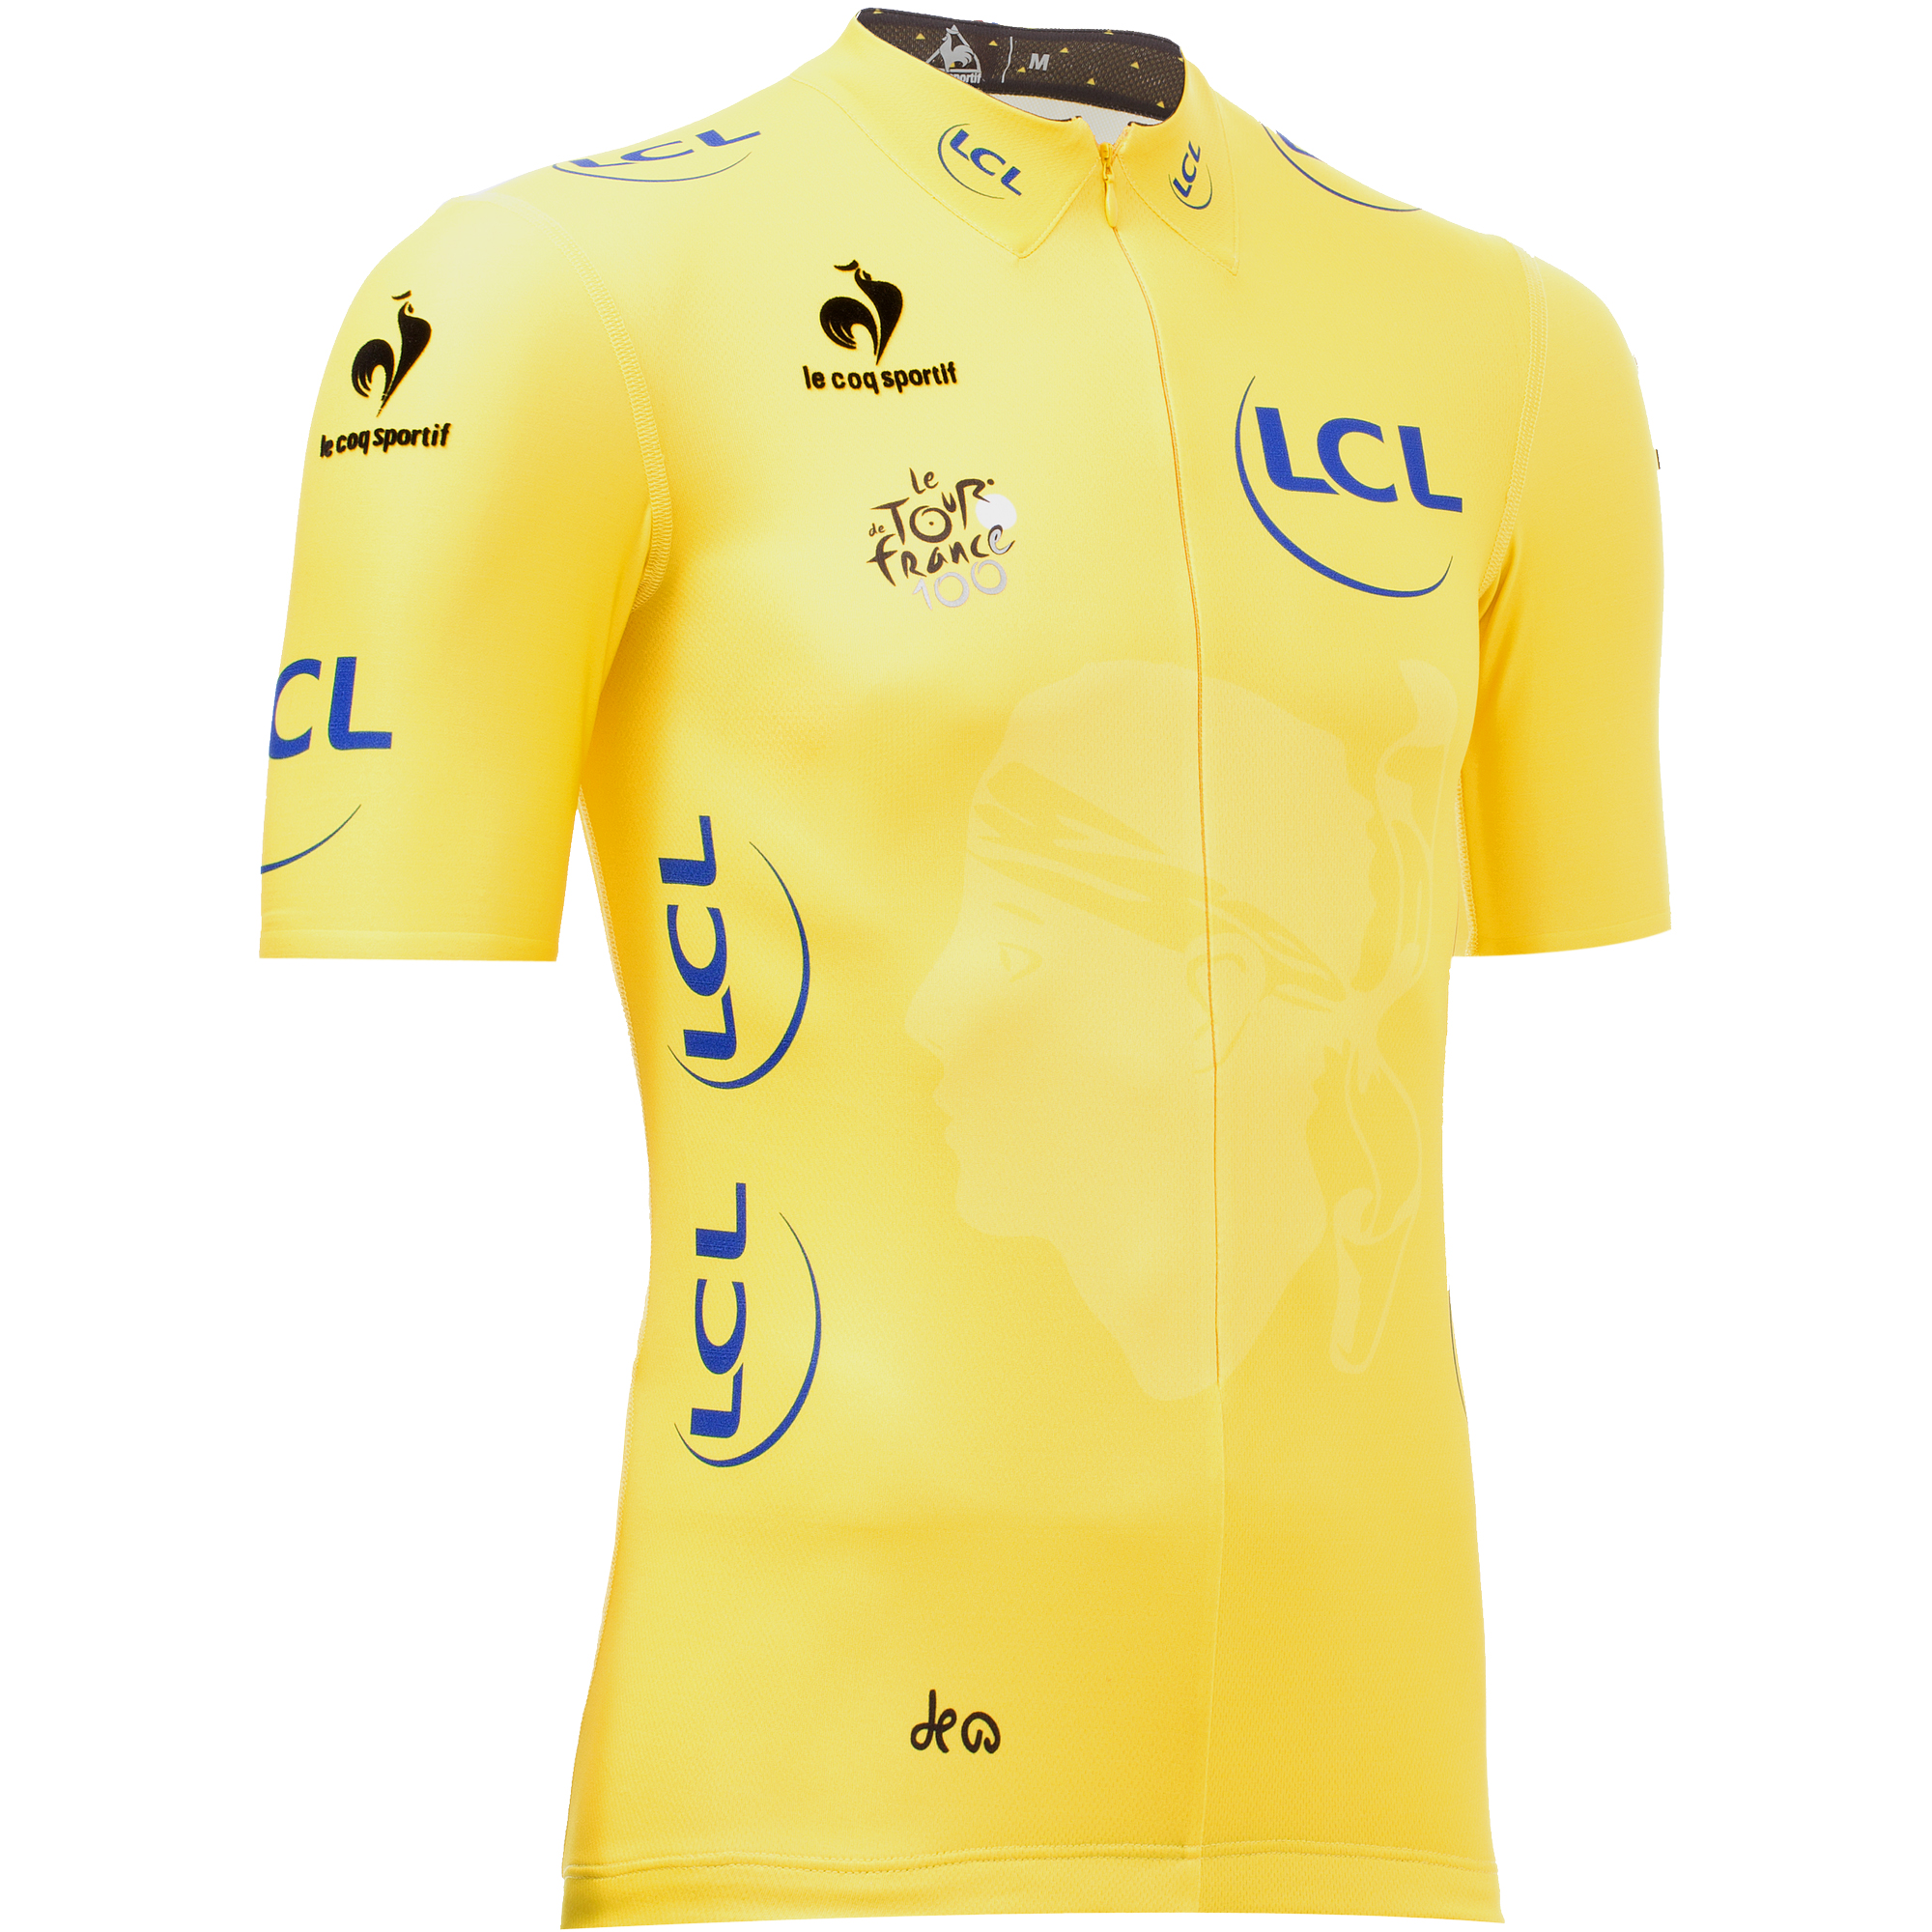 Tour De France 2013 yellow jersey revealed | Sports News Australia